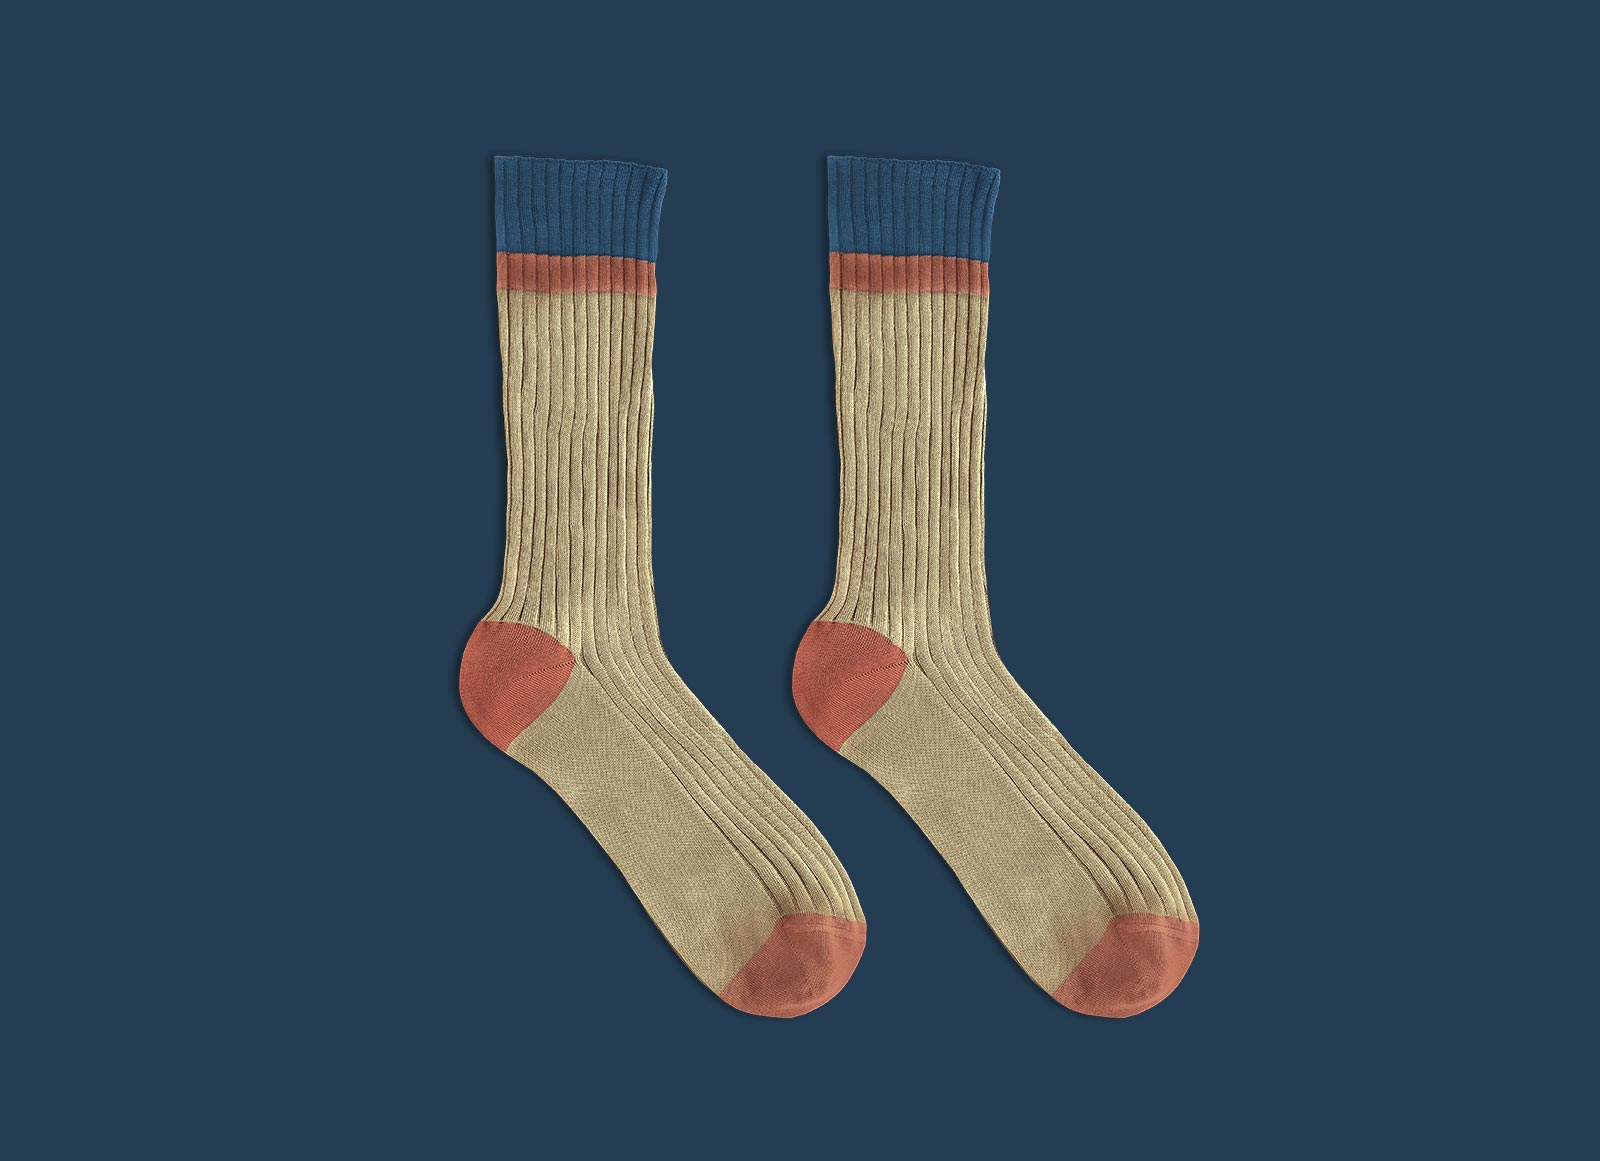 Free-Photorealistic-Mid-Calf-Socks-Mockup-PSD